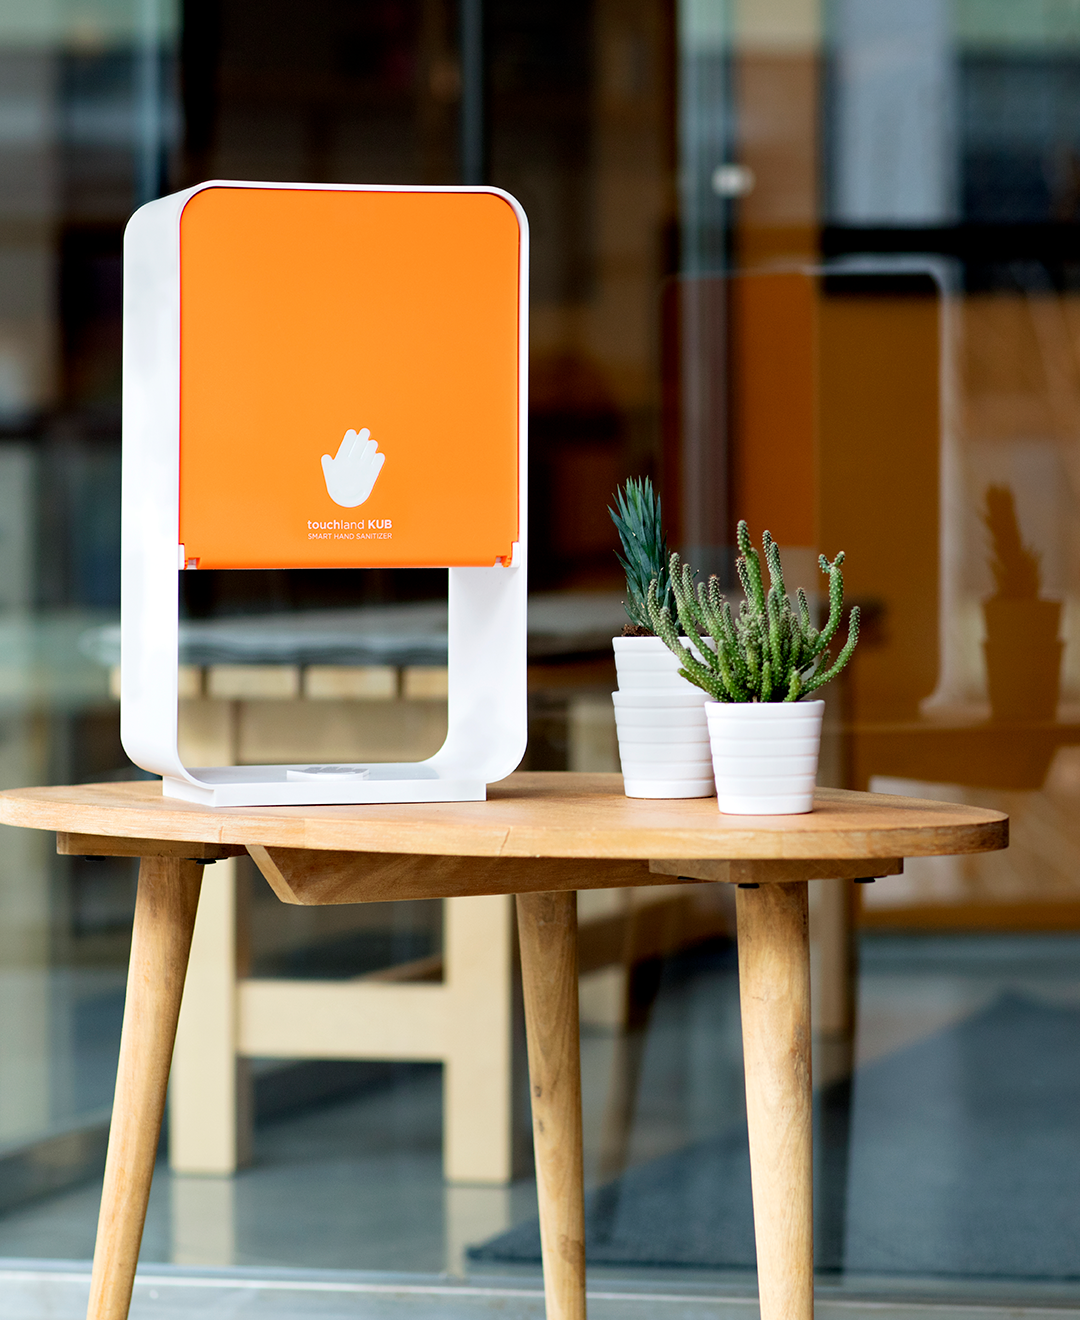 Orange kub dispenser on wood table outside office